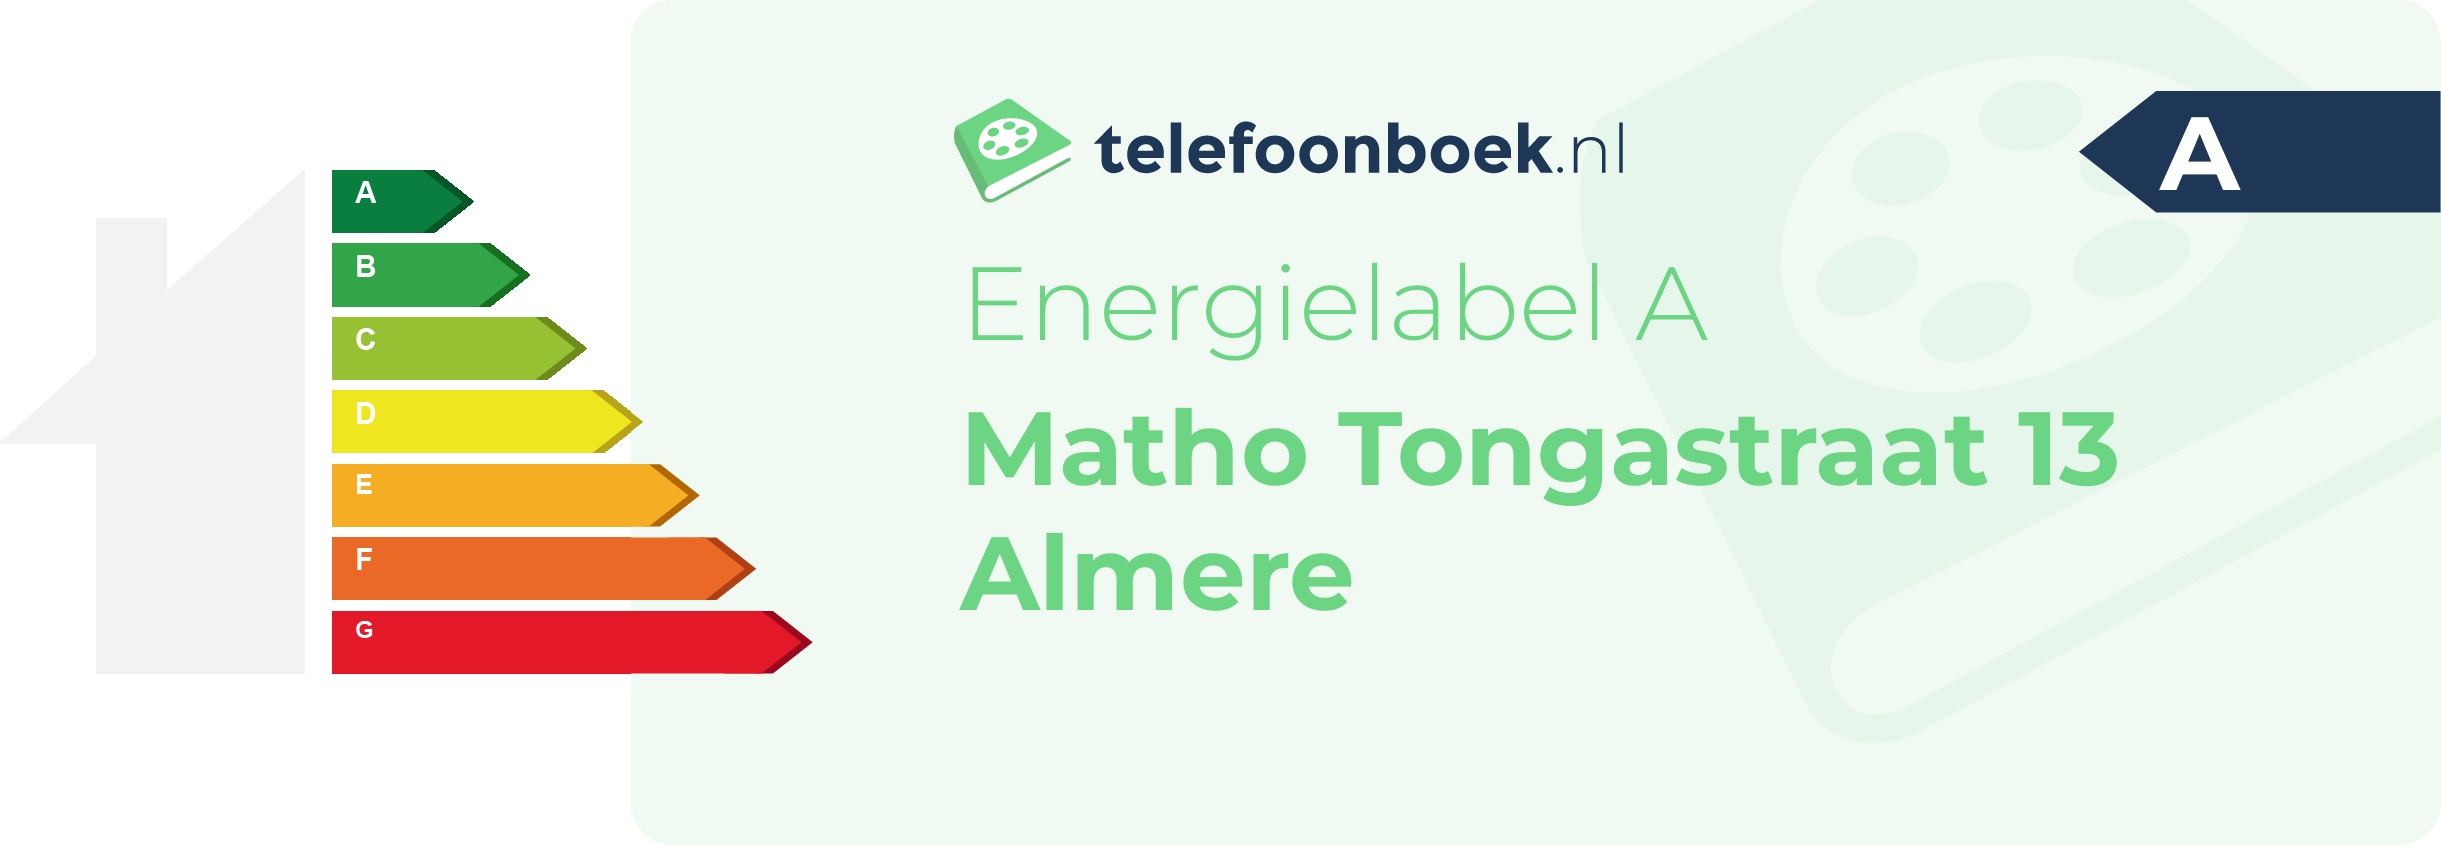 Energielabel Matho Tongastraat 13 Almere